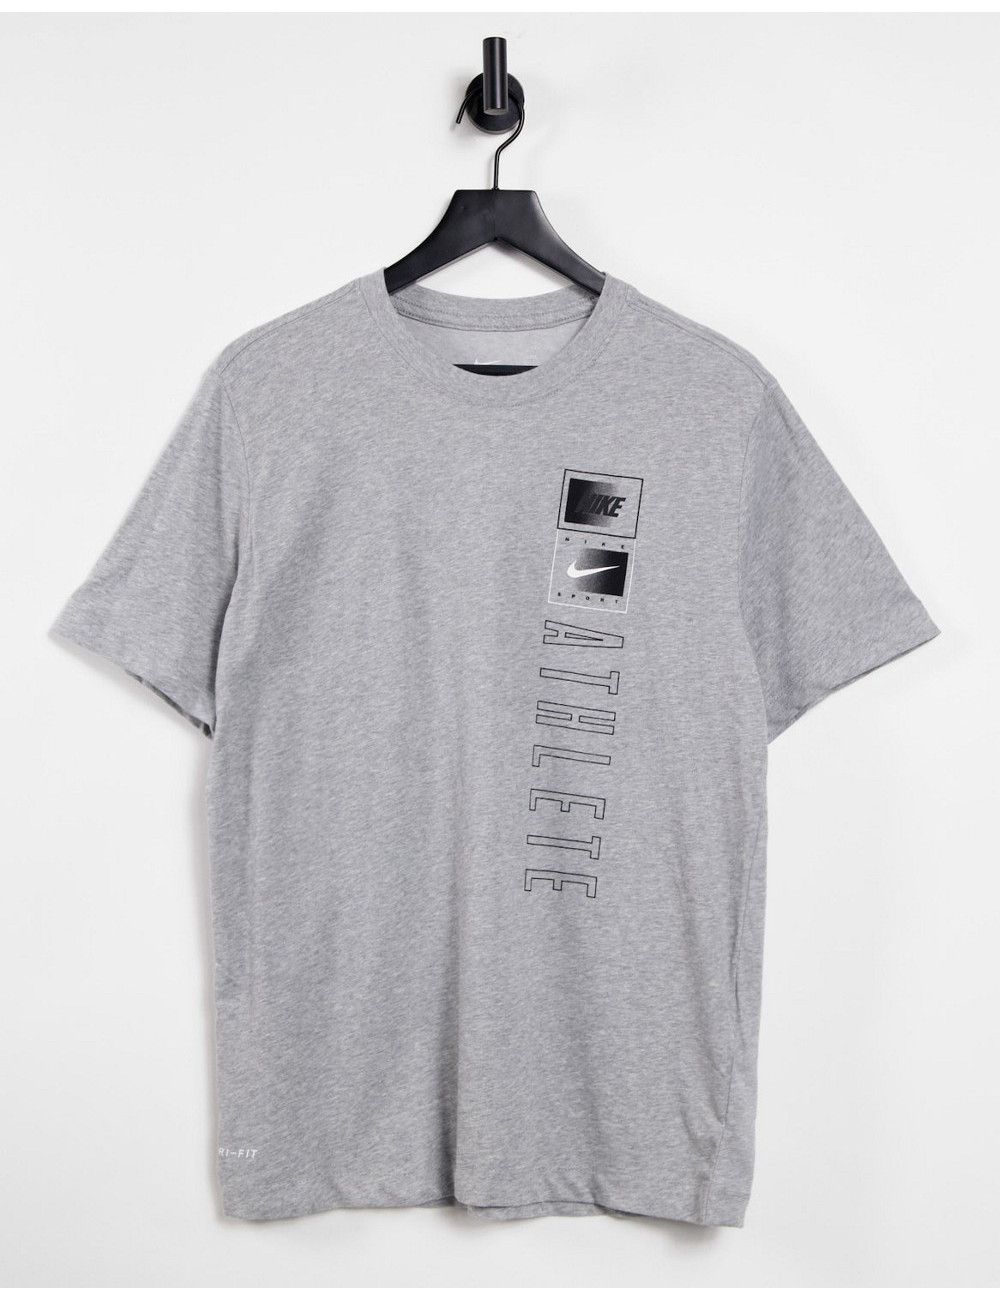 Nike Dri-FIT t-shirt in grey